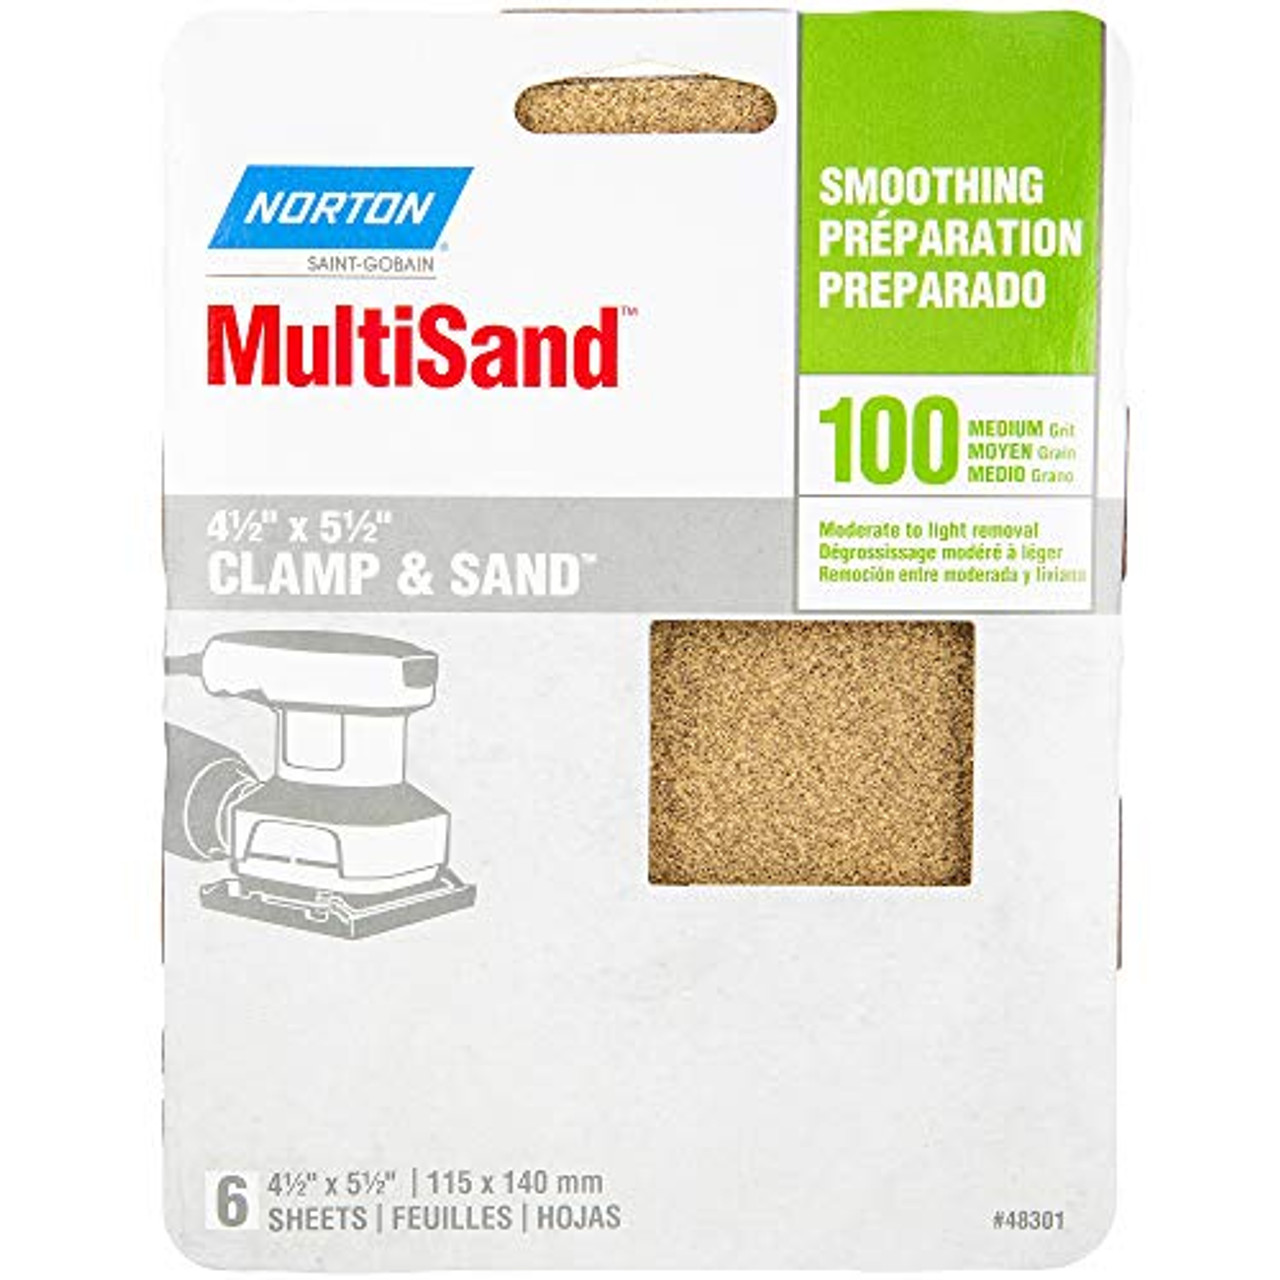 Norton (48301), MultiSand 4-1/2" x 5-1/2", 100 Medium Grit Sandpaper Sheets, 1 Pack of 6 Sanding Sheets